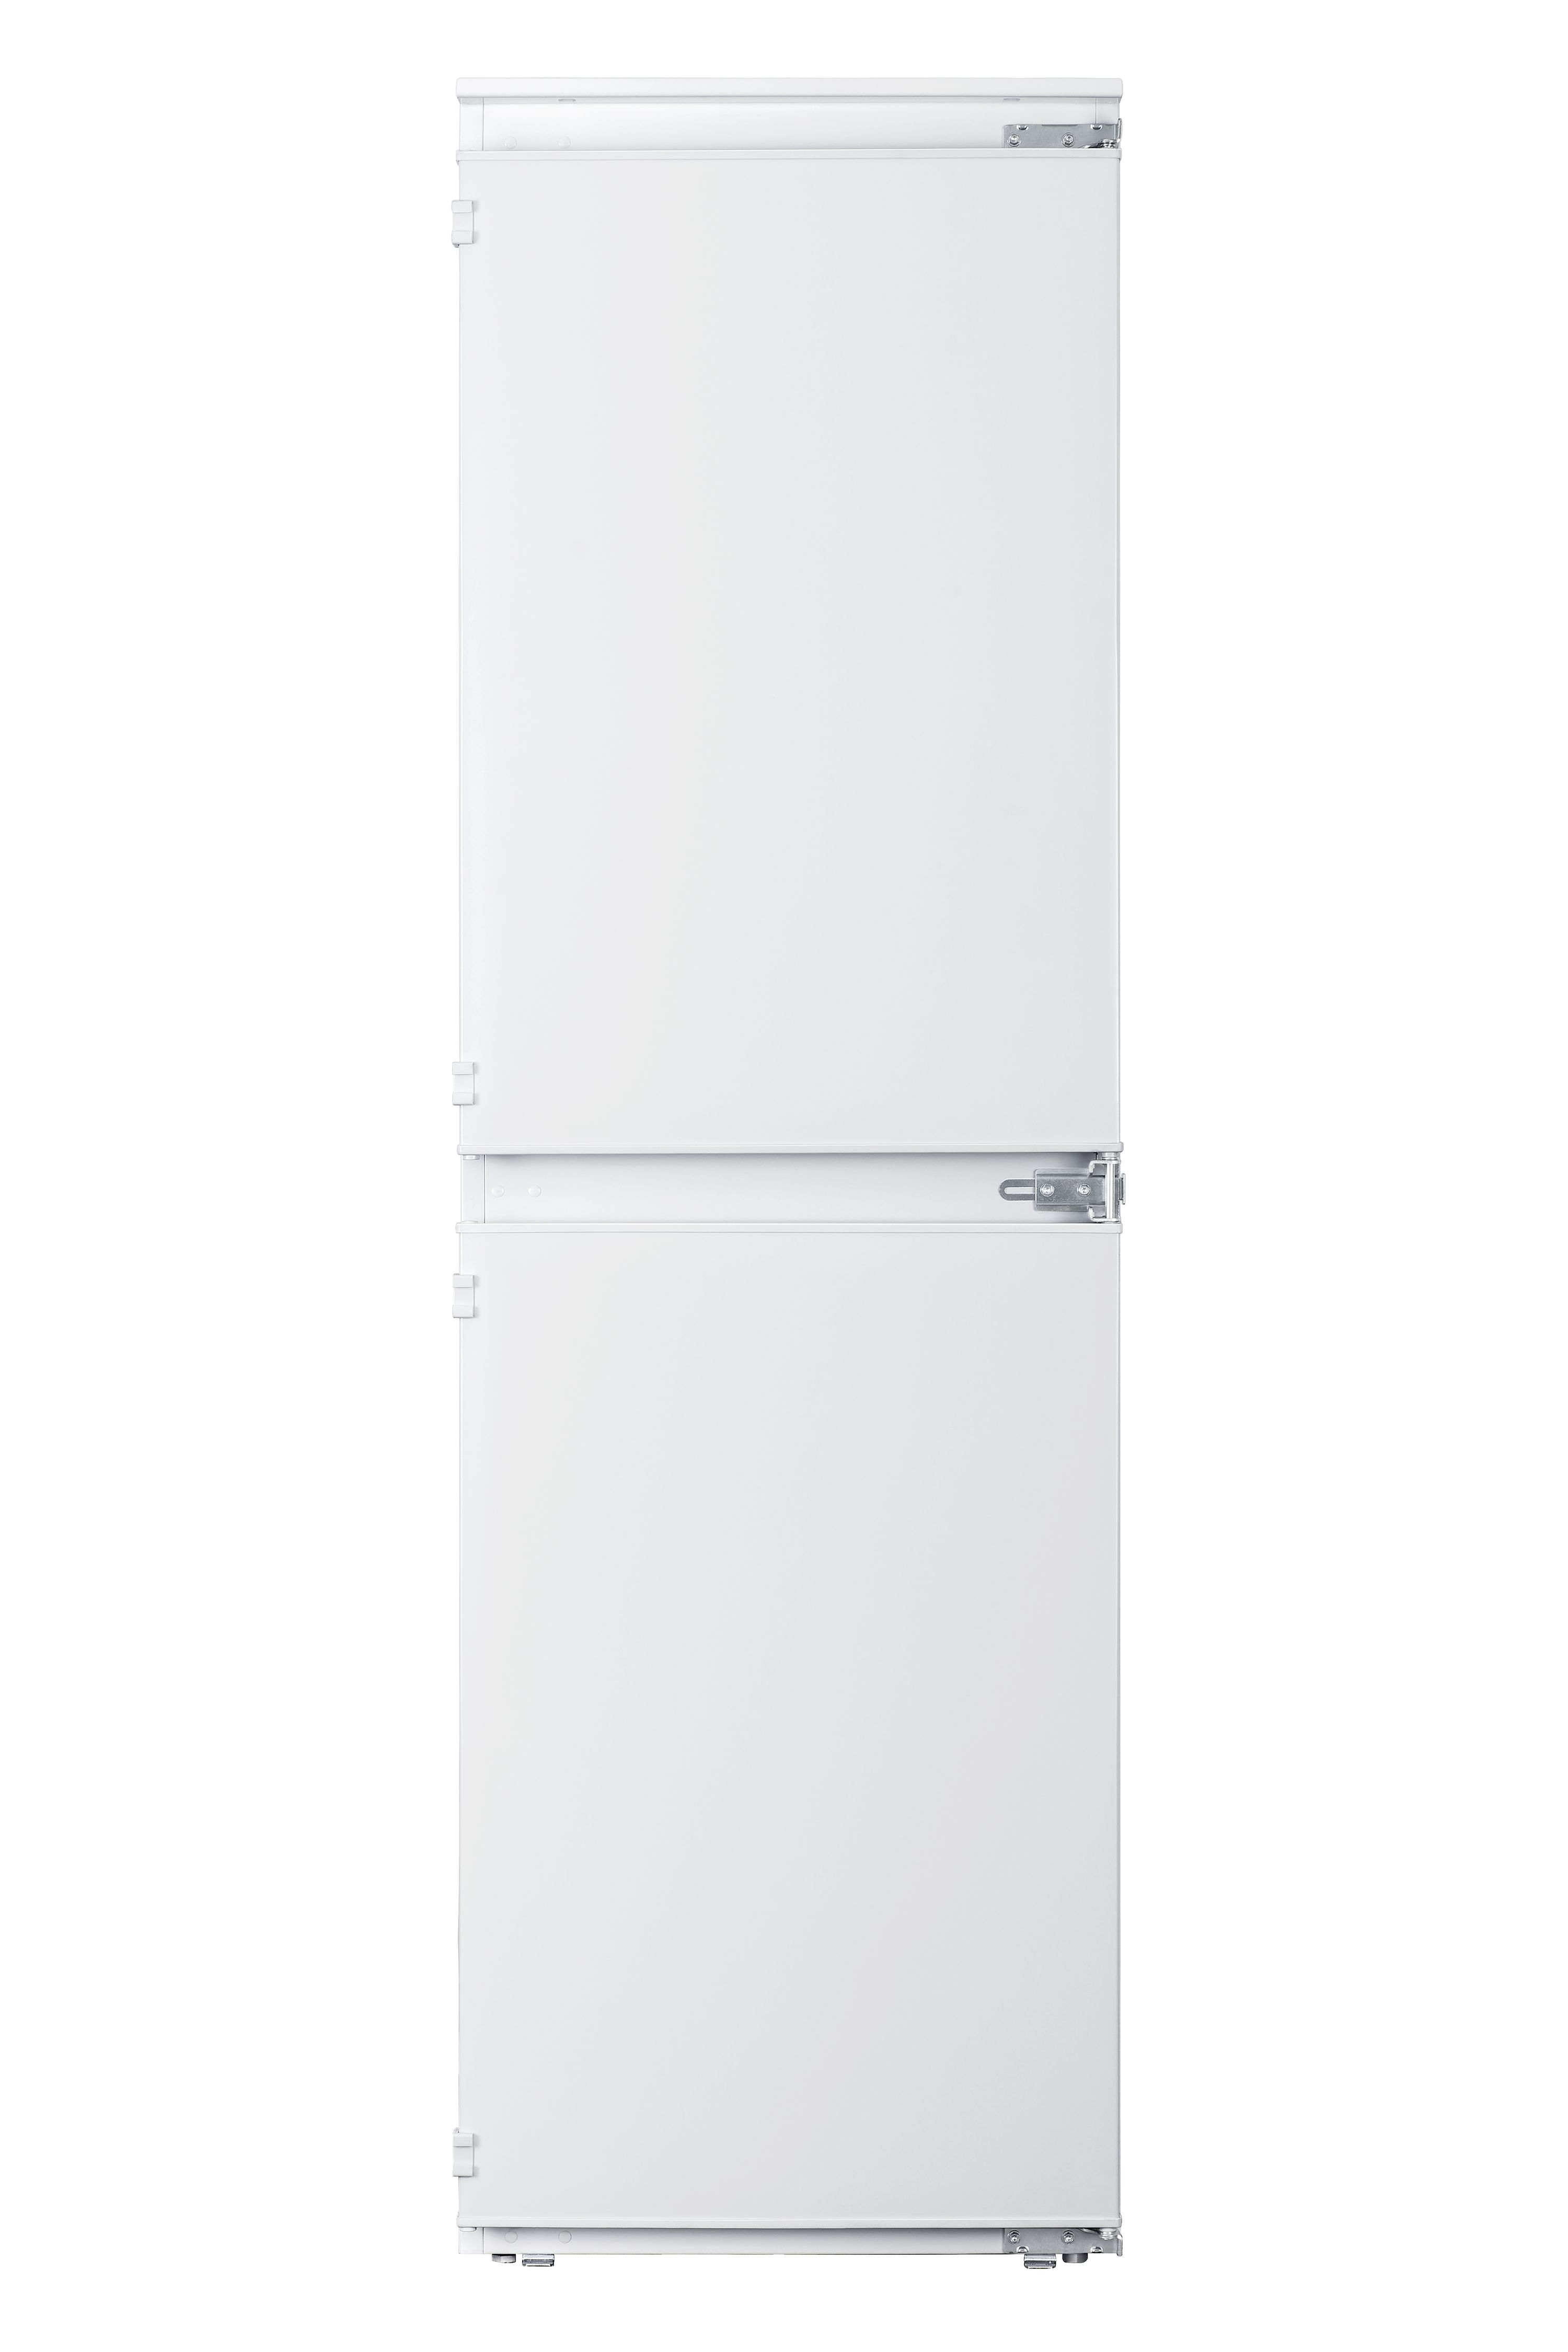 GoodHome GHBI5050FFUK 50:50 Classic Integrated Automatic defrost Fridge freezer - White